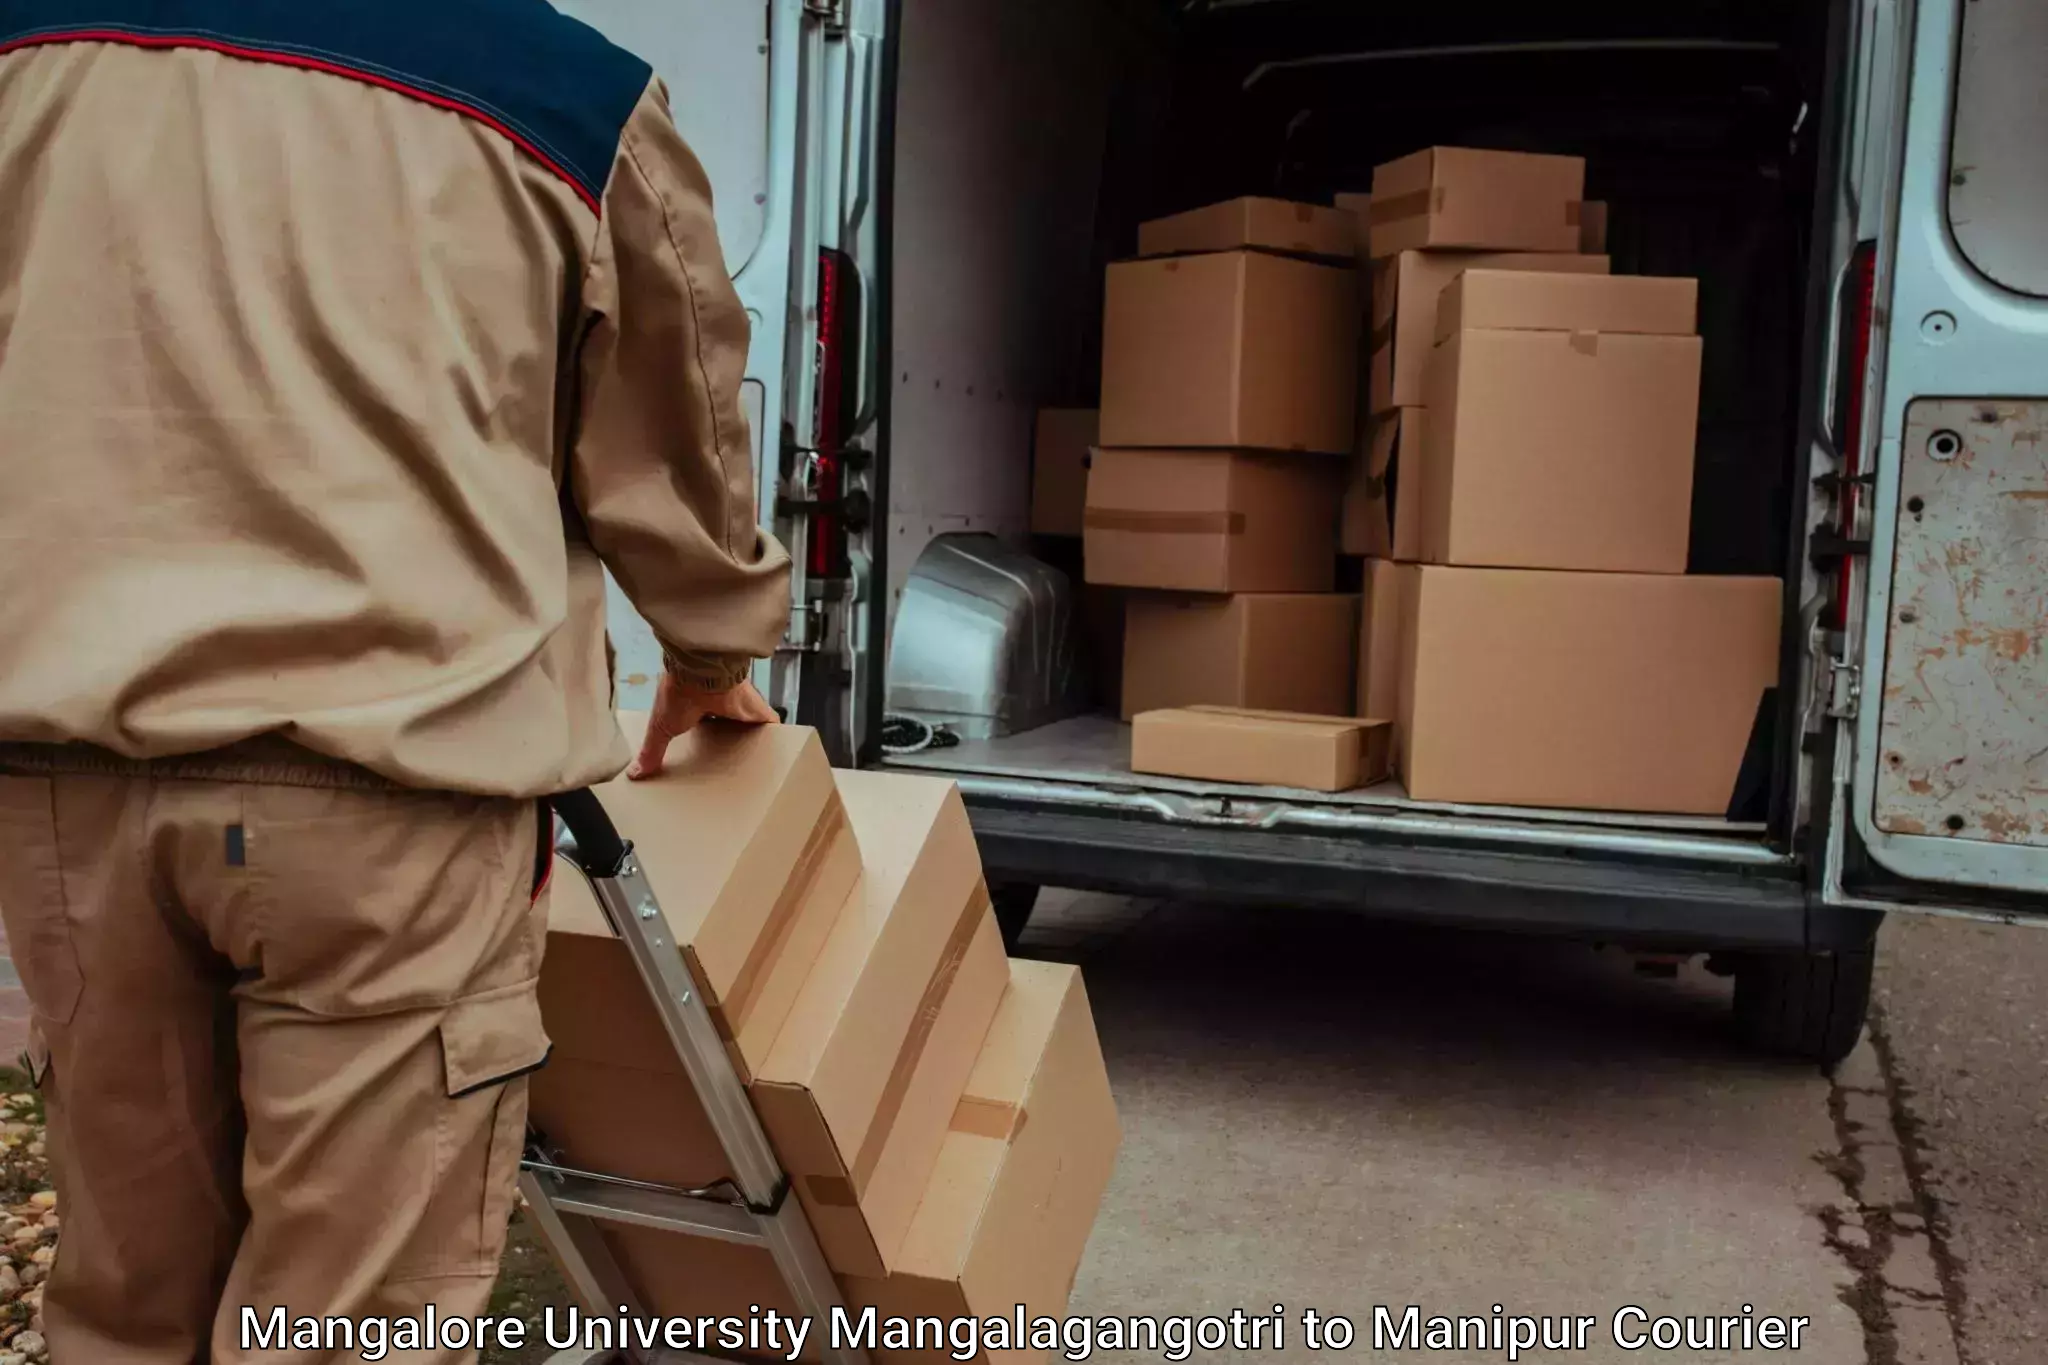 Moving and storage services Mangalore University Mangalagangotri to Chandel